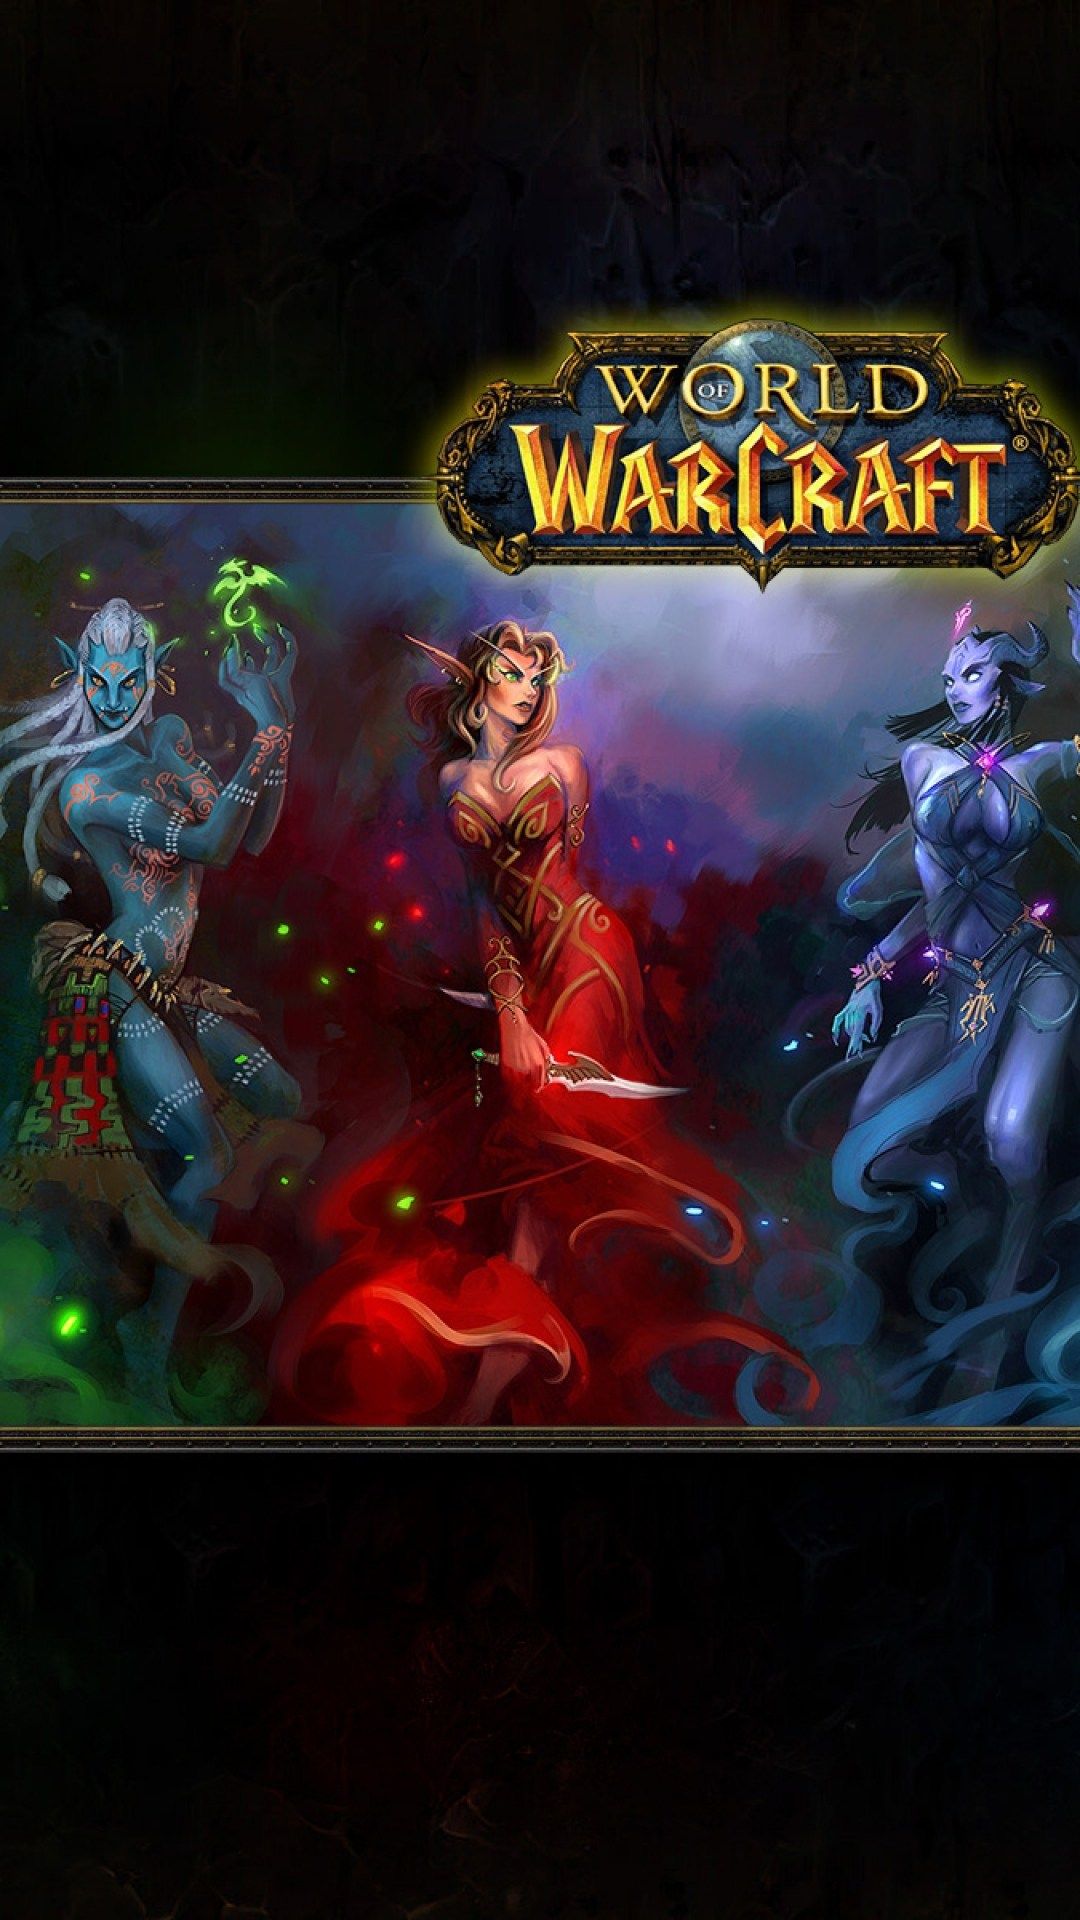 Cool Wallpaper For Dual Monitors World Of Warcraft - HD Wallpaper 